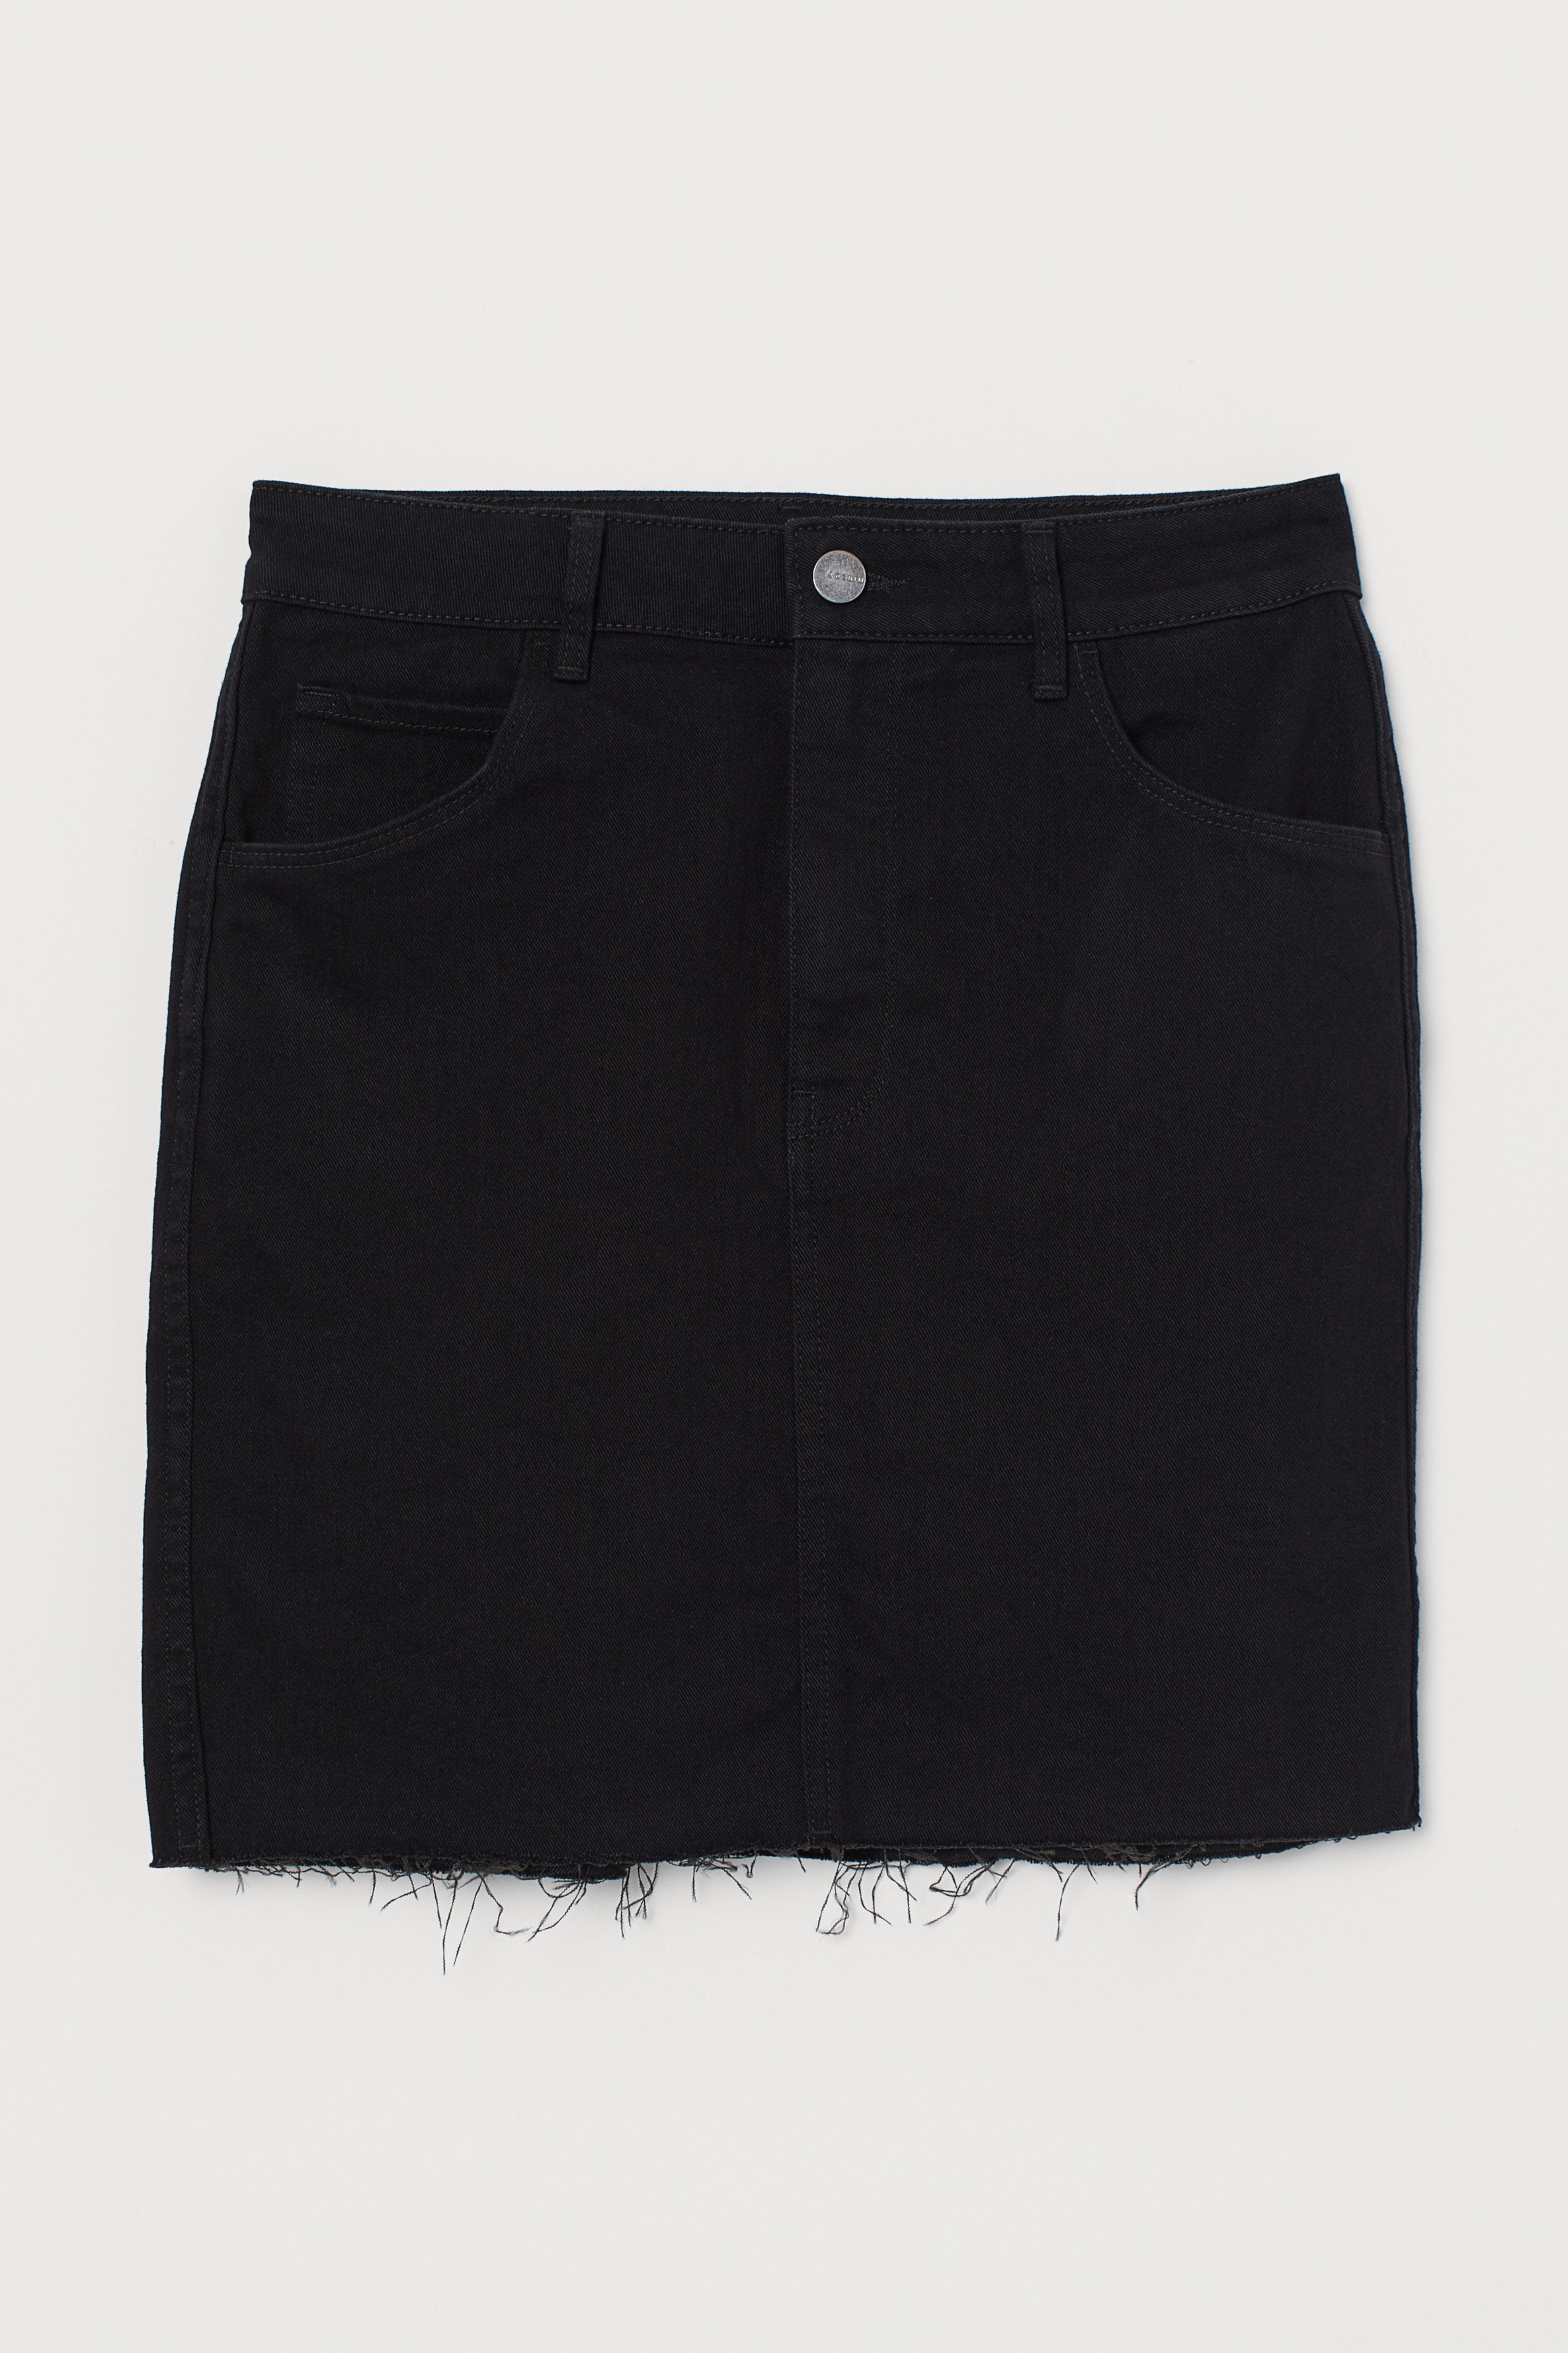 black denim skirt bardot